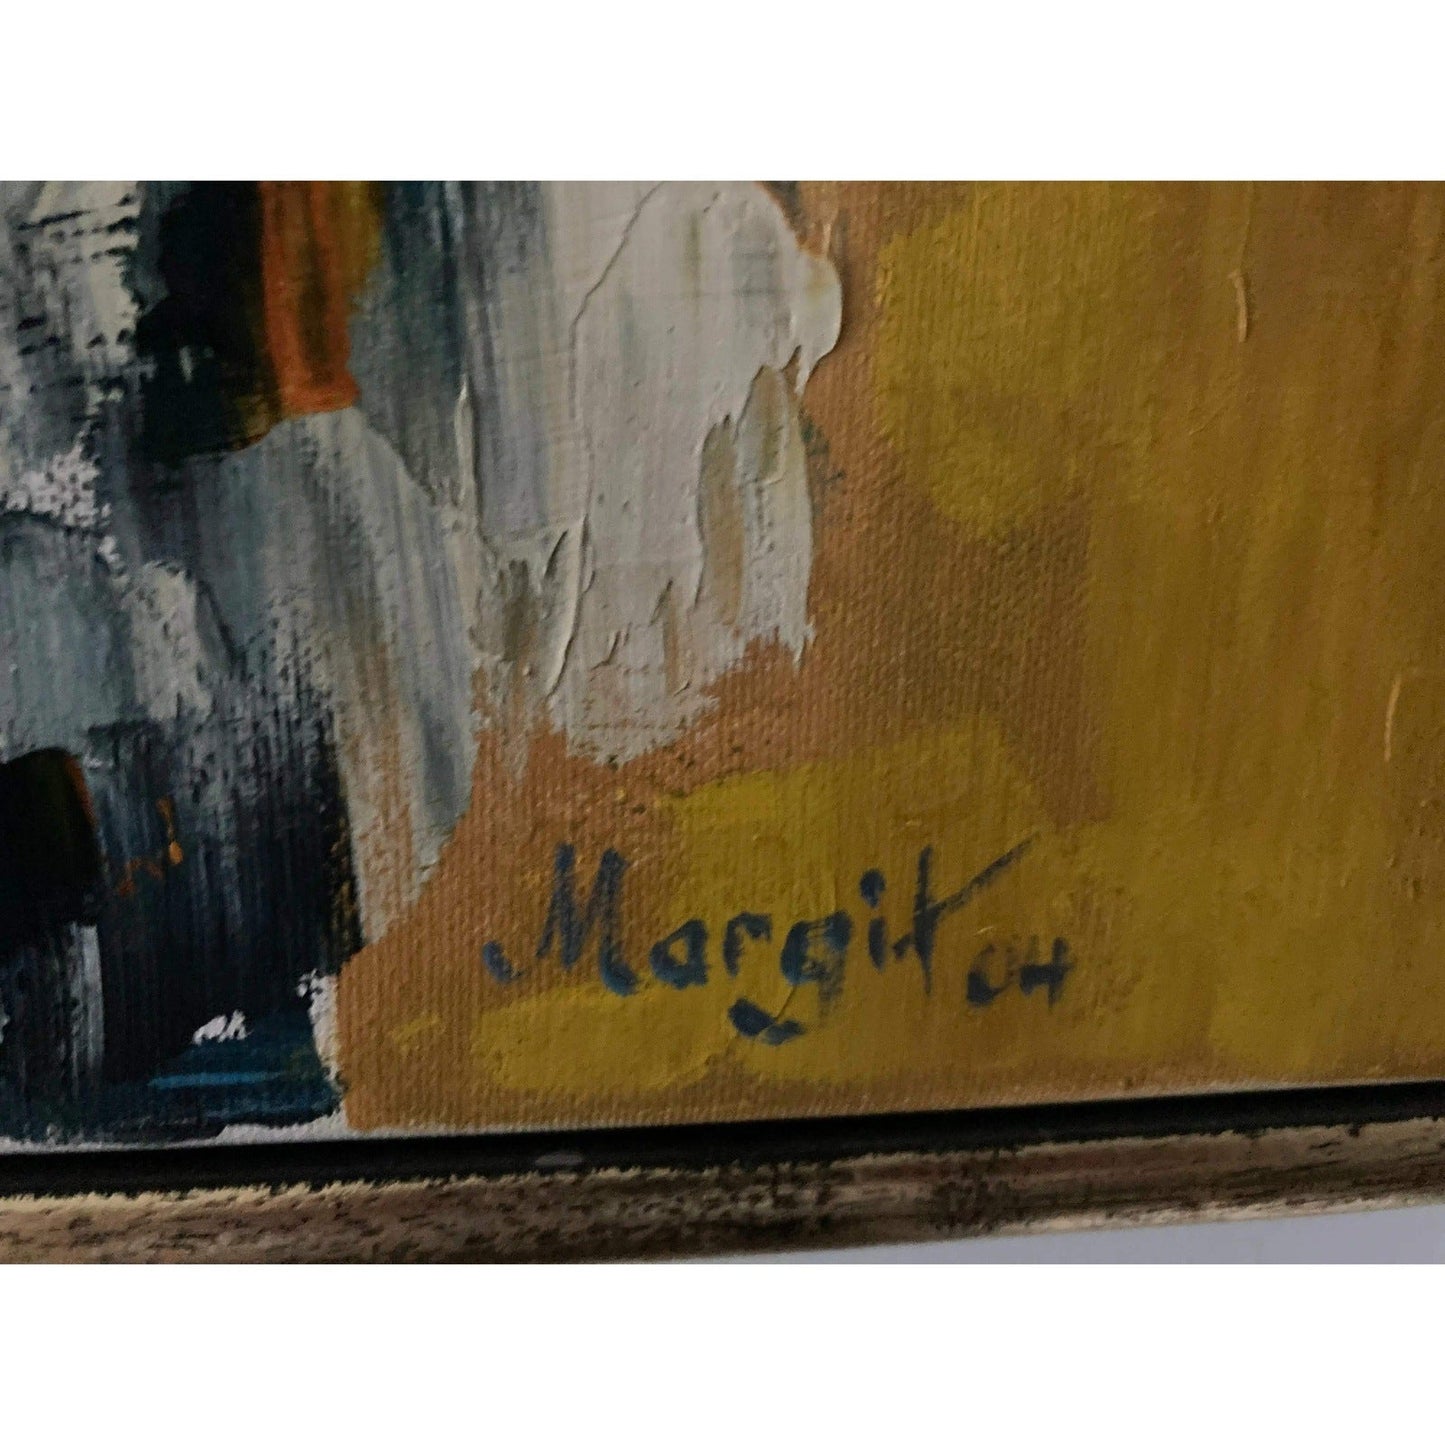 Apples + Tea - Margit '04: Artwork - Margit Gréczi Painting BooksCardsNBikes